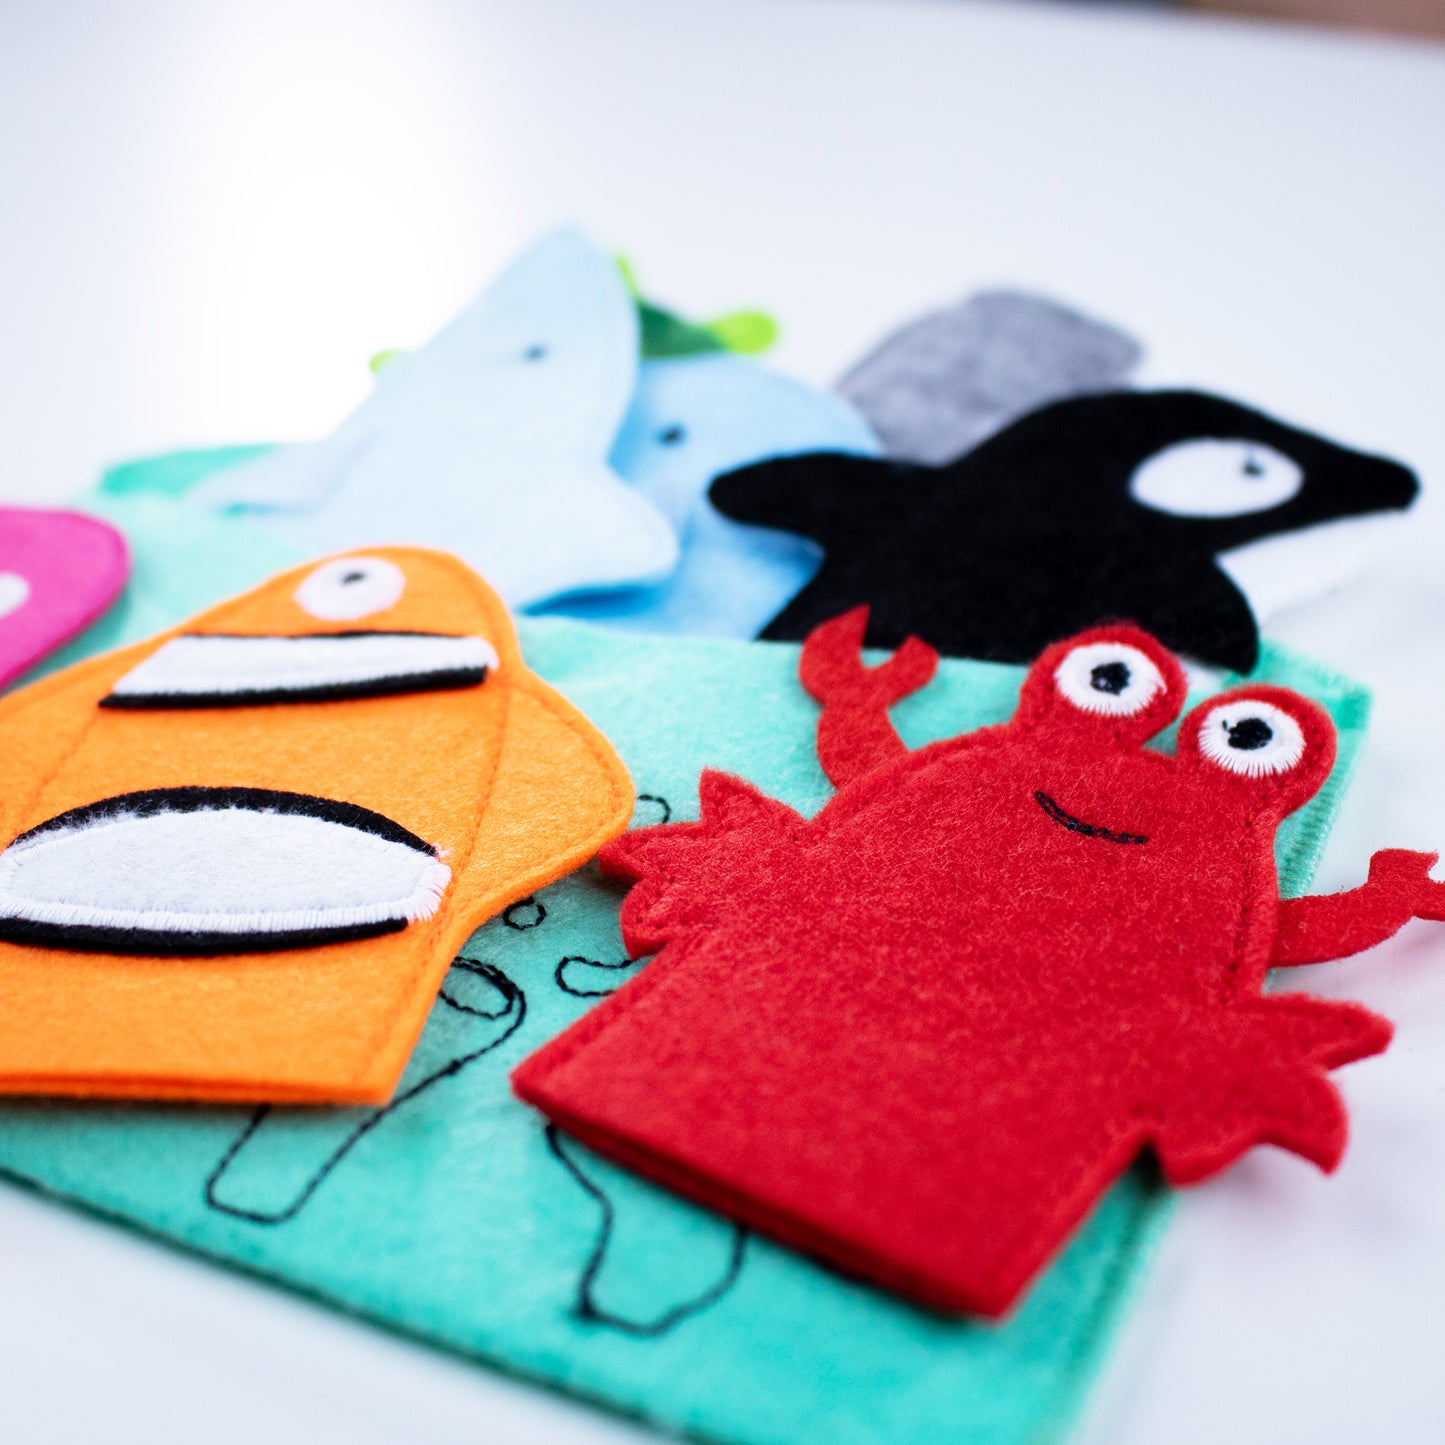 Sea Animals Finger Puppets – Set of 8